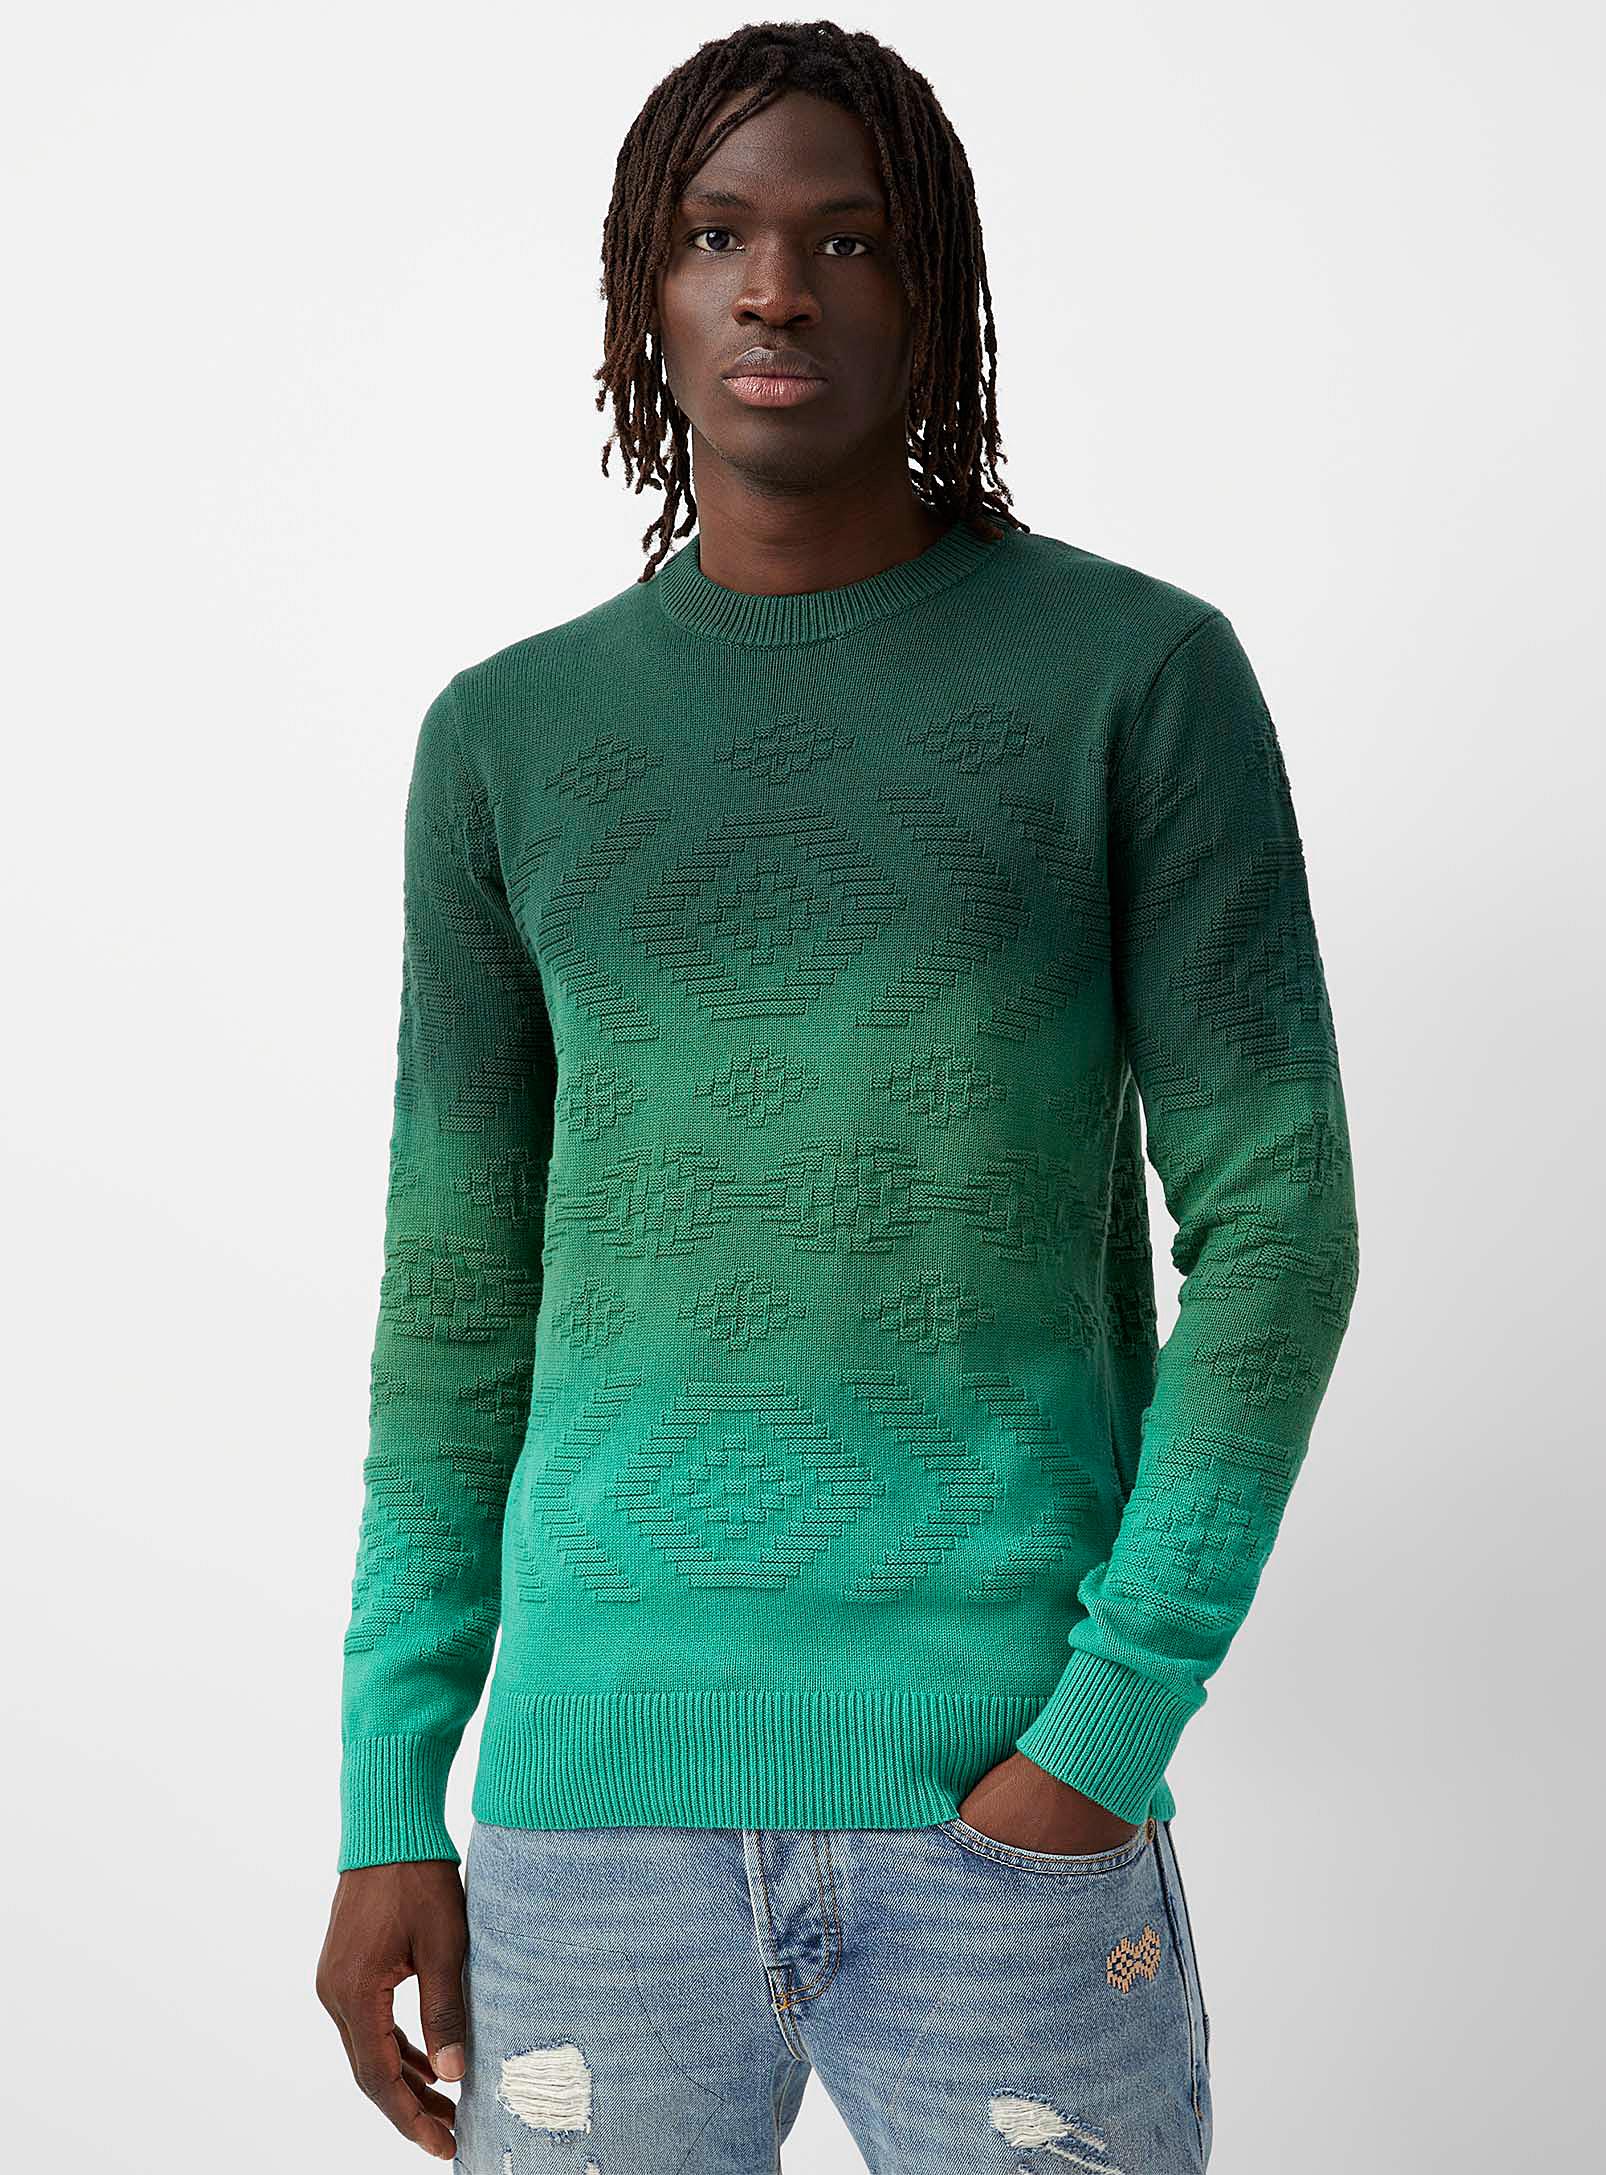 Scotch & Soda Ombré Jacquard Sweater in Green for Men | Lyst